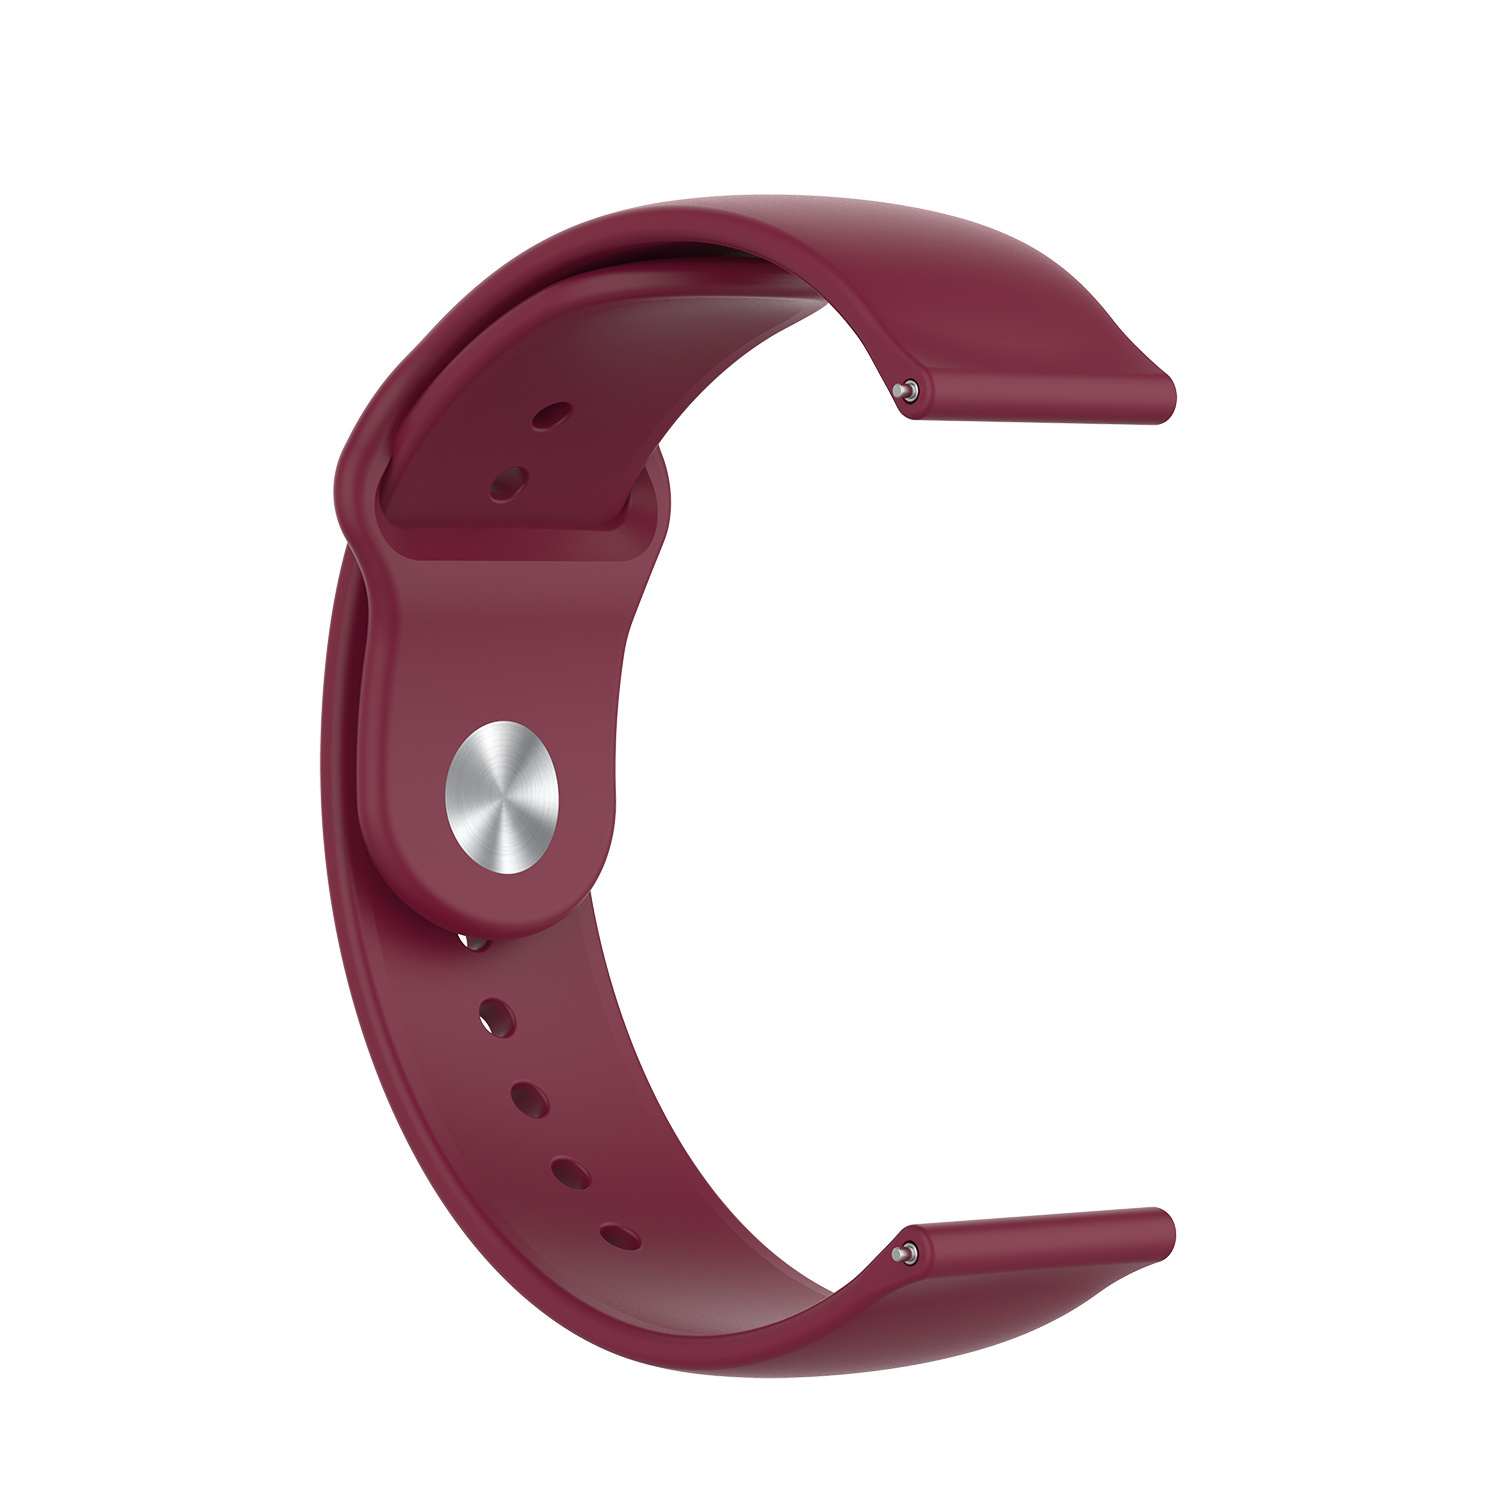 Cinturino sport in silicone per Huawei Watch GT - rosso vino